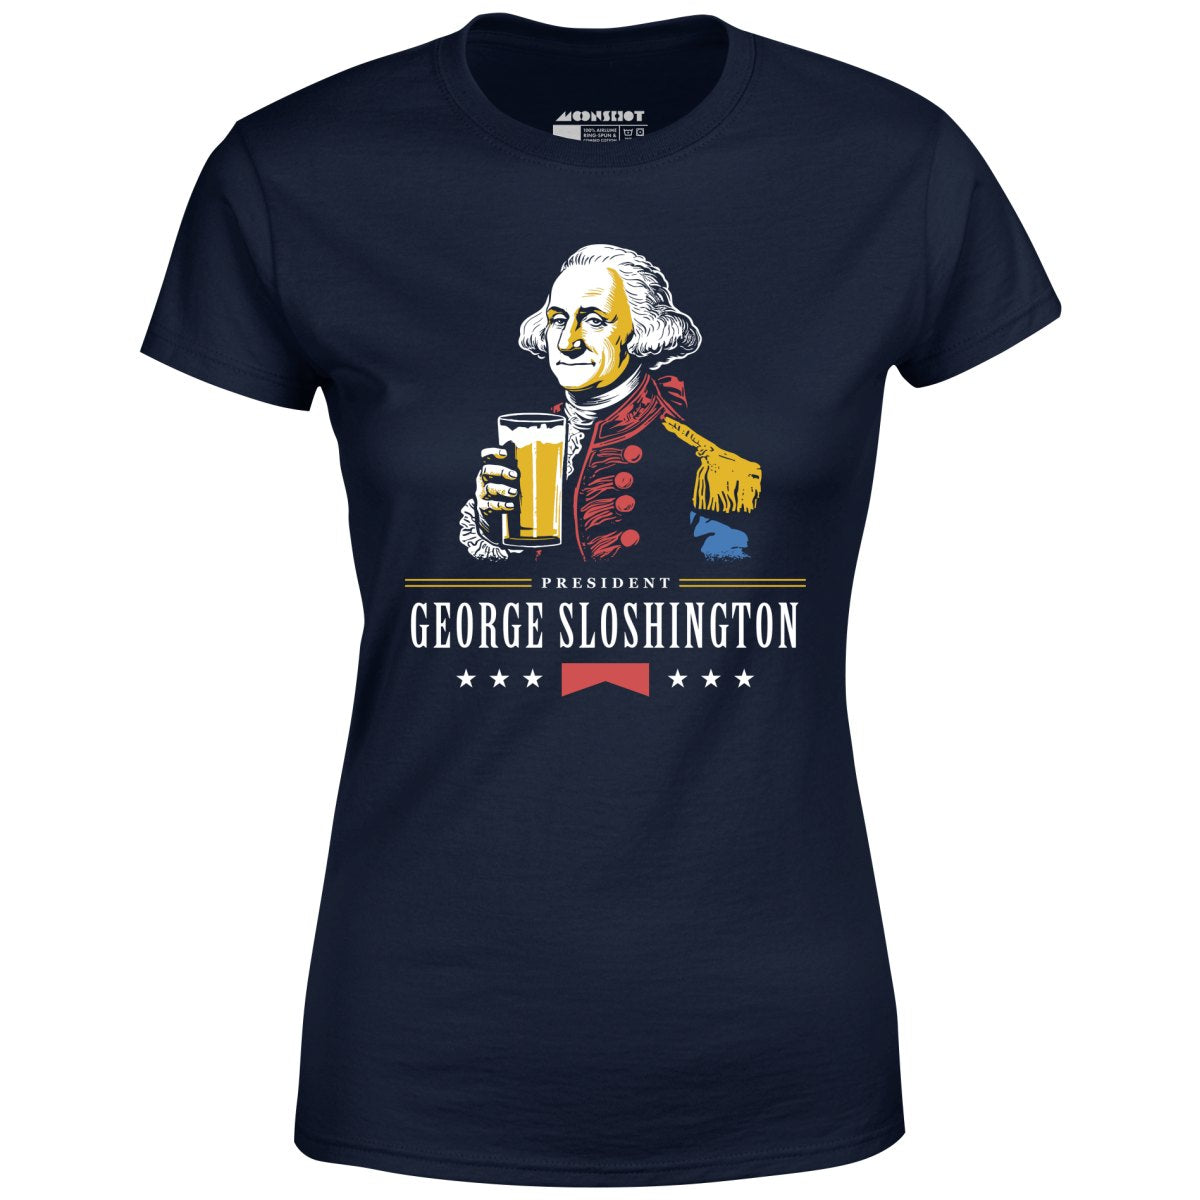 President George Sloshington - Women's T-Shirt